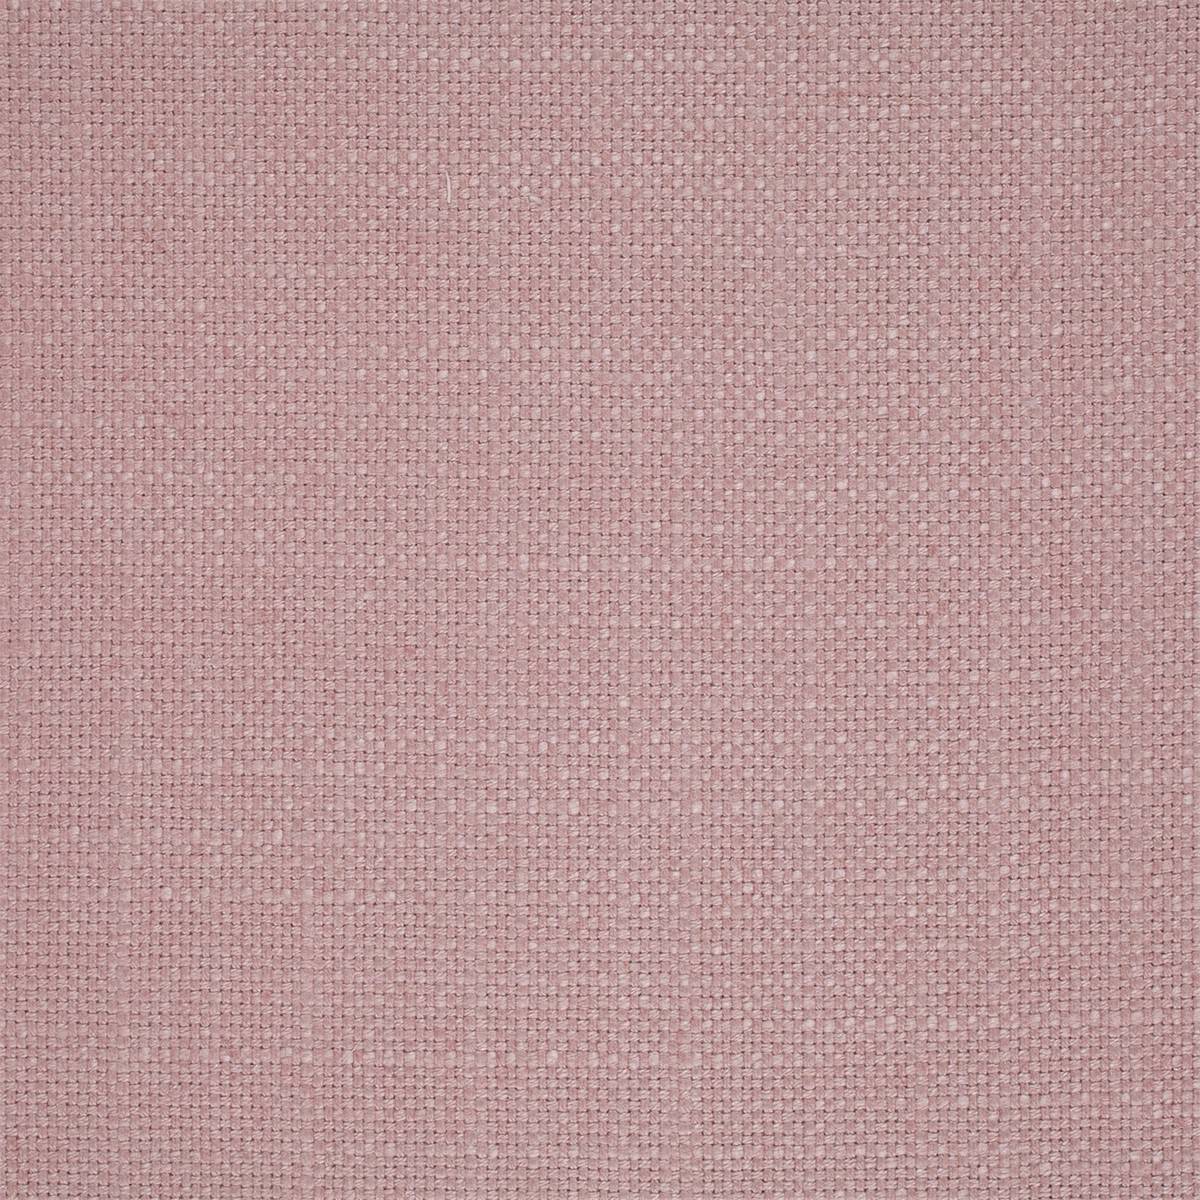 Tuscany Deep Pink Fabric by Sanderson